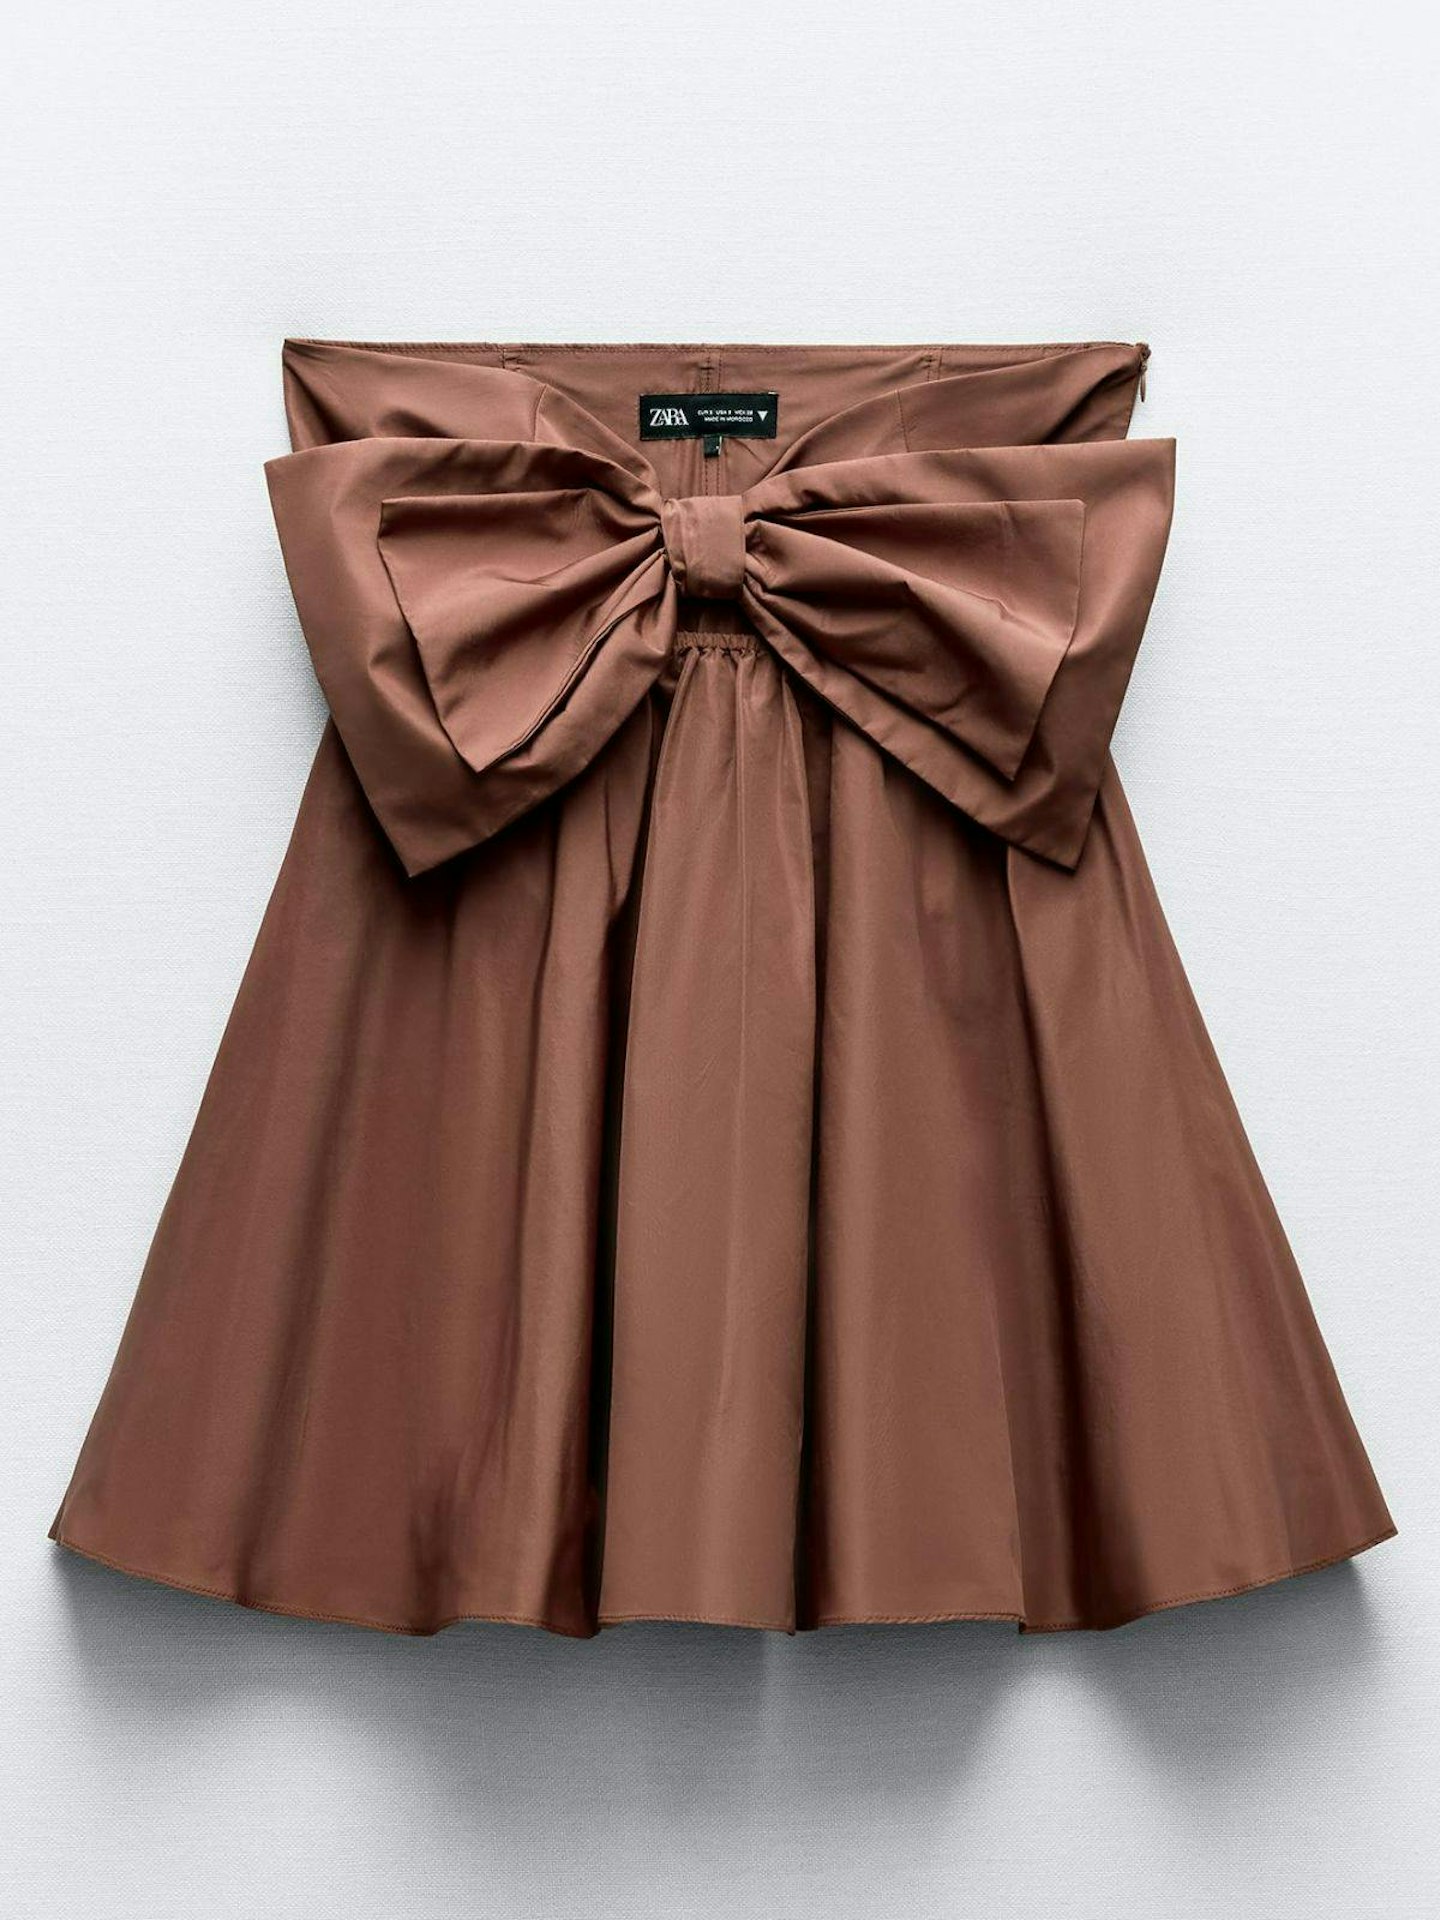 Zara Cut-Out Taffeta Dress With Bow